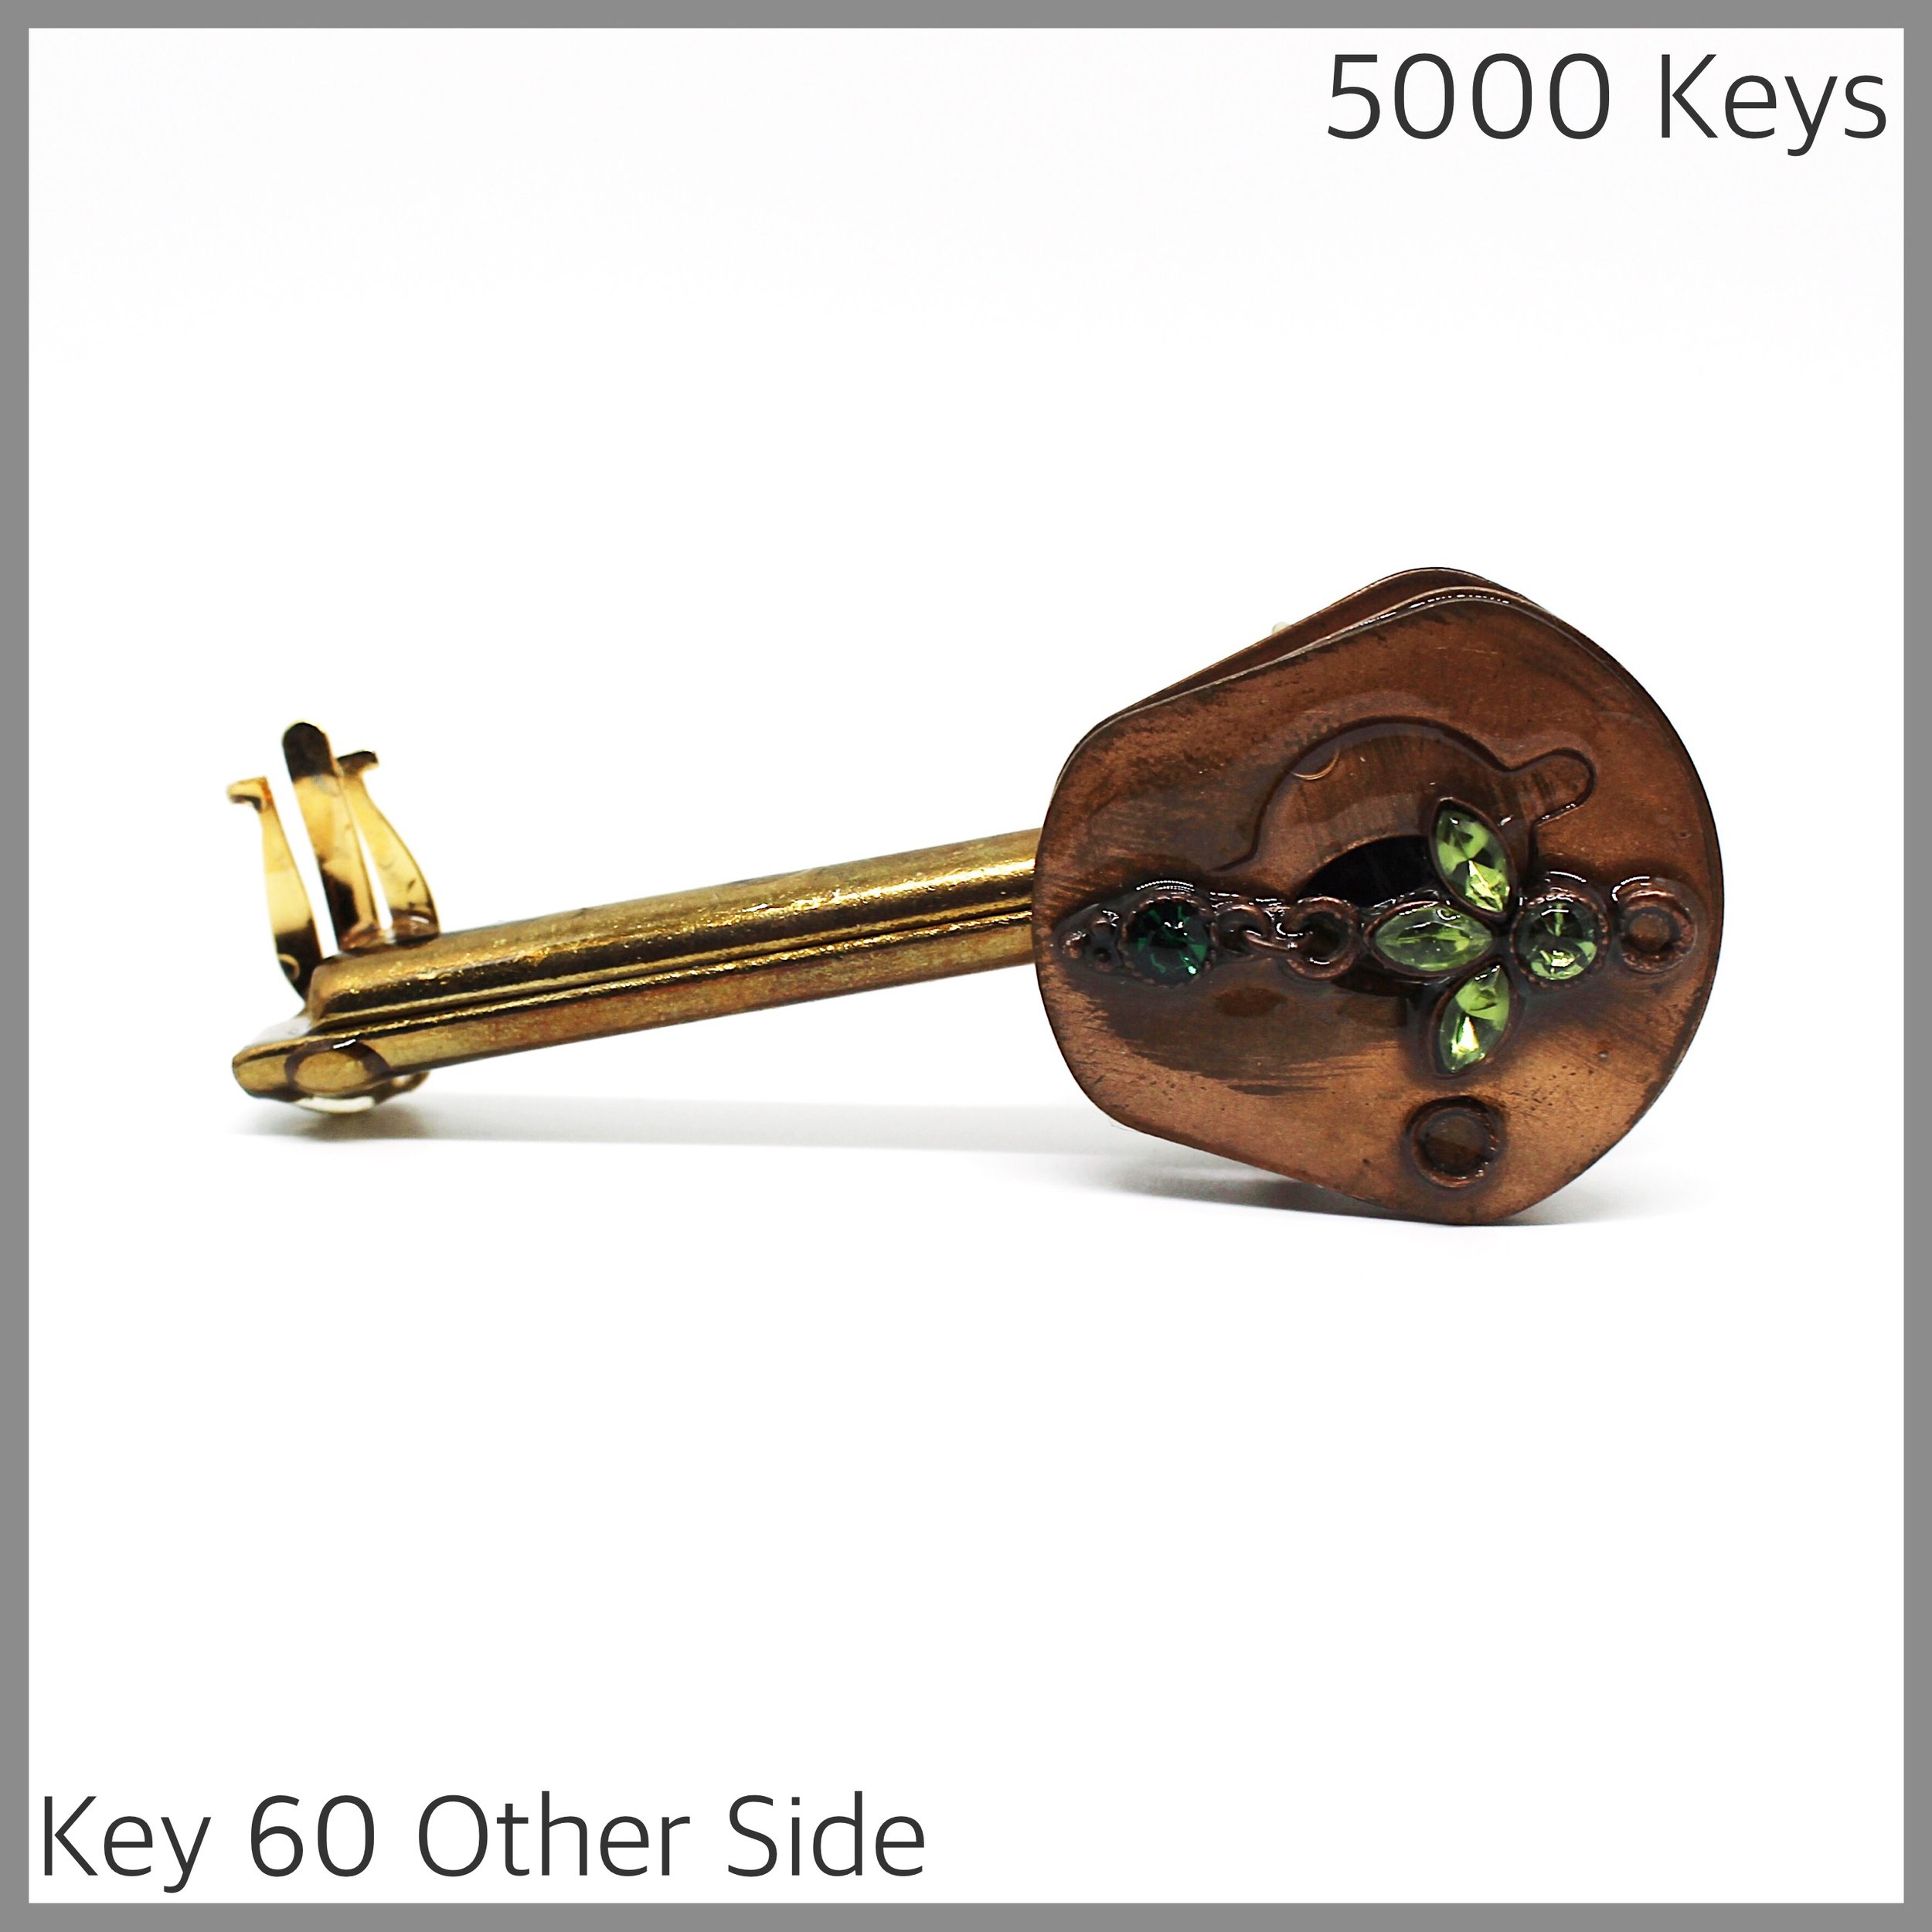 Key 60 other side - 1.JPG